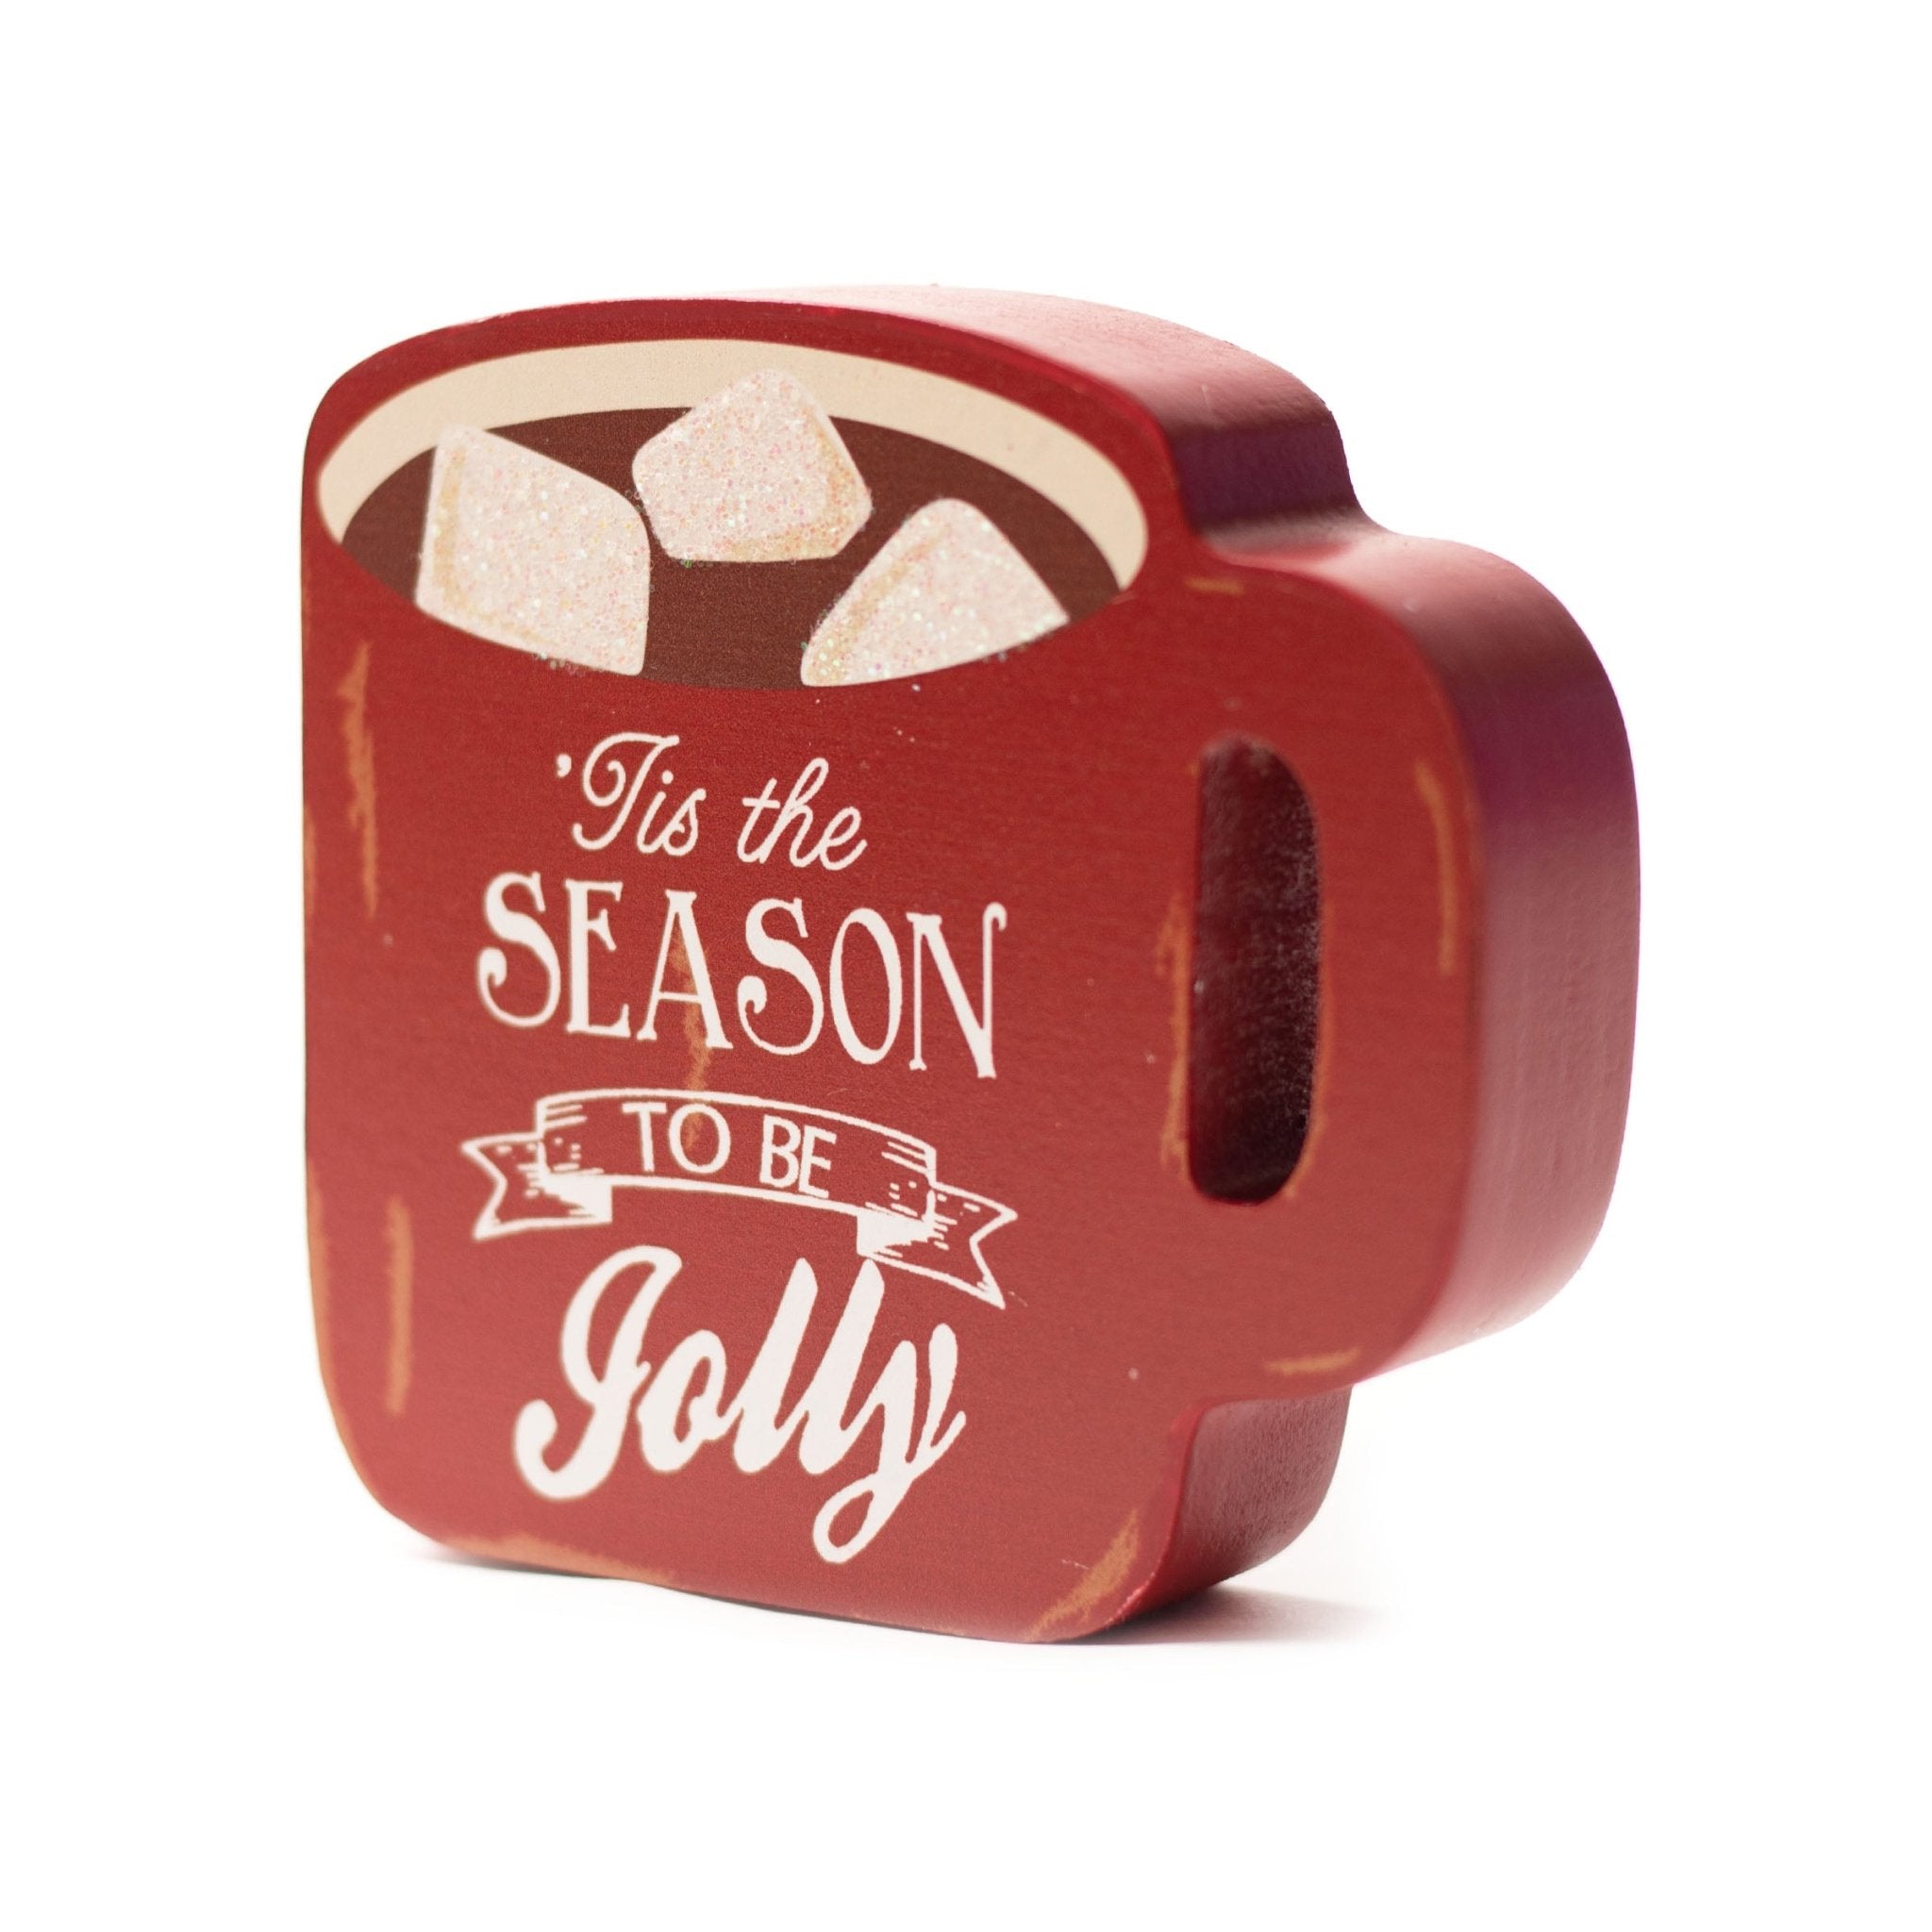 Tis the season to be jolly Wooden Mug Sign 10x10cm 1010008 - MODA FLORA Santa's Workshop